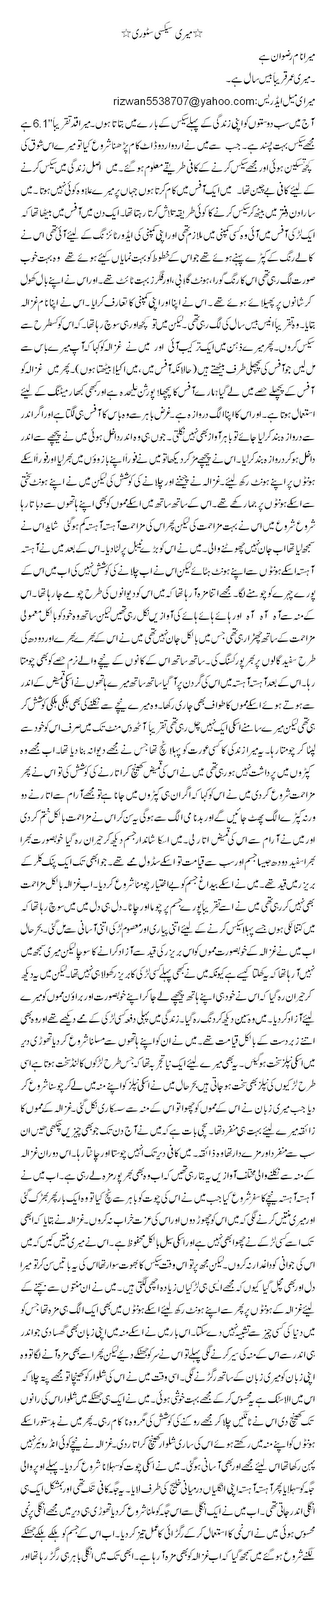 Urdu Ki Gandi Kahaniyan In Urdu Font.